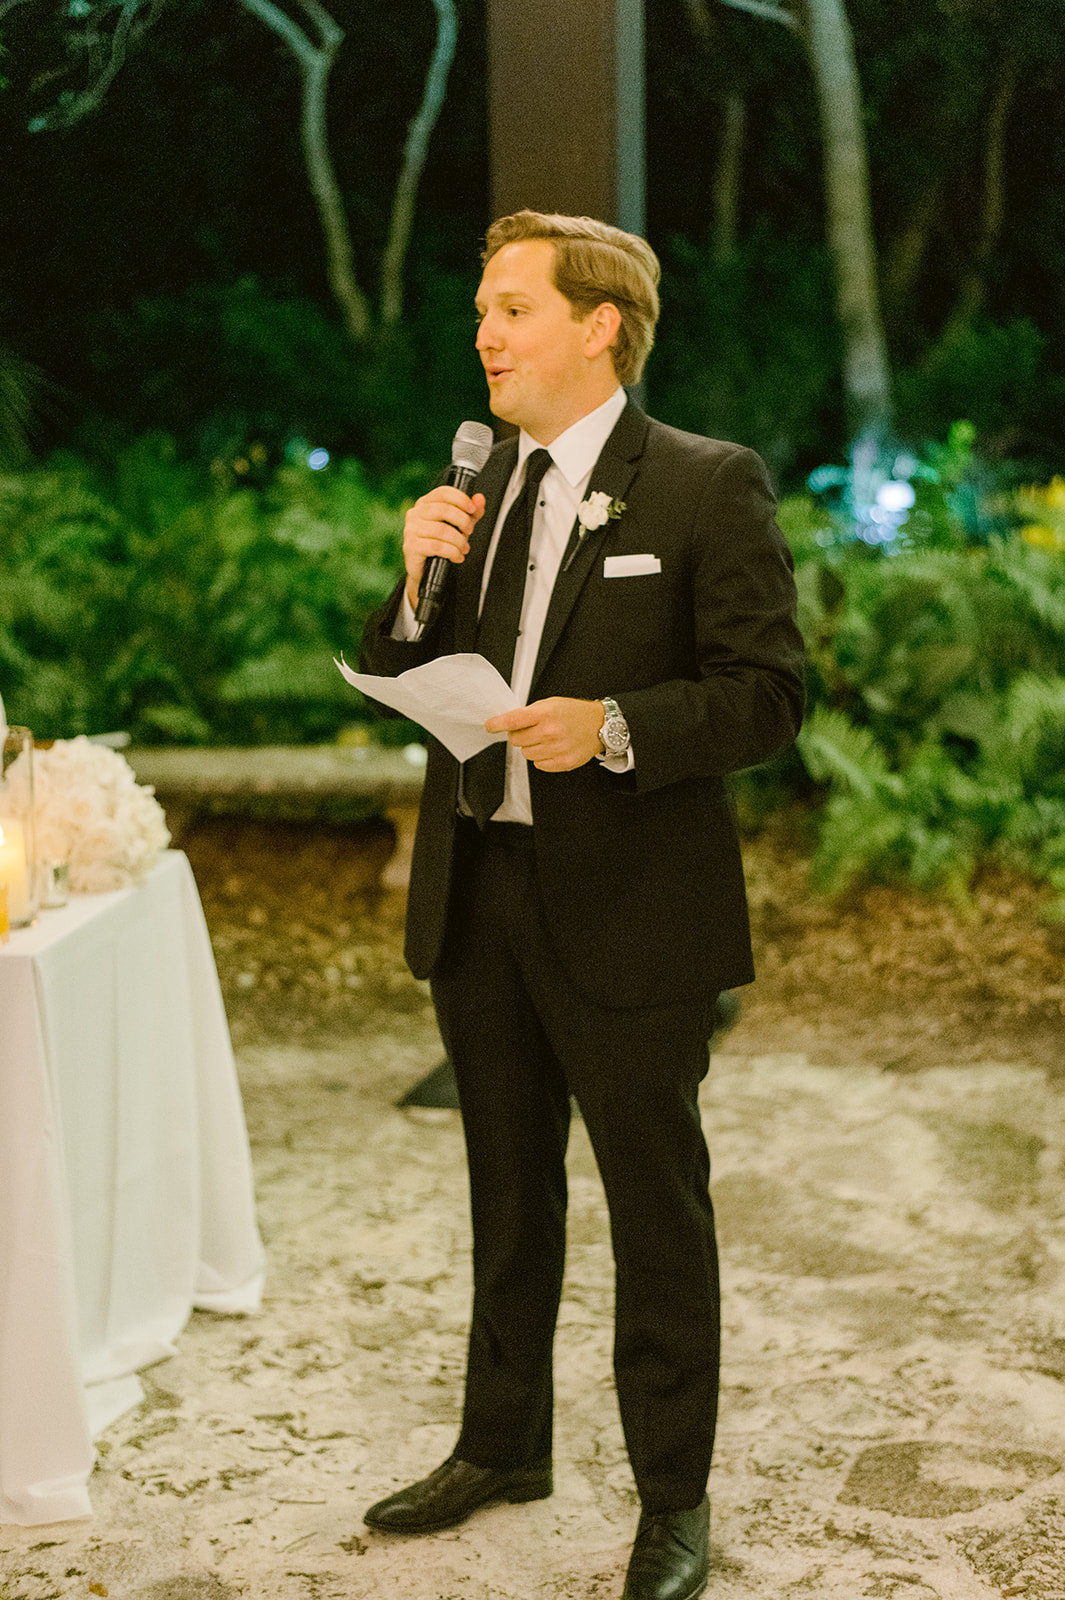 Miami Florida Wedding Photographer capturing the stunning Deering Estate Wedding venue
